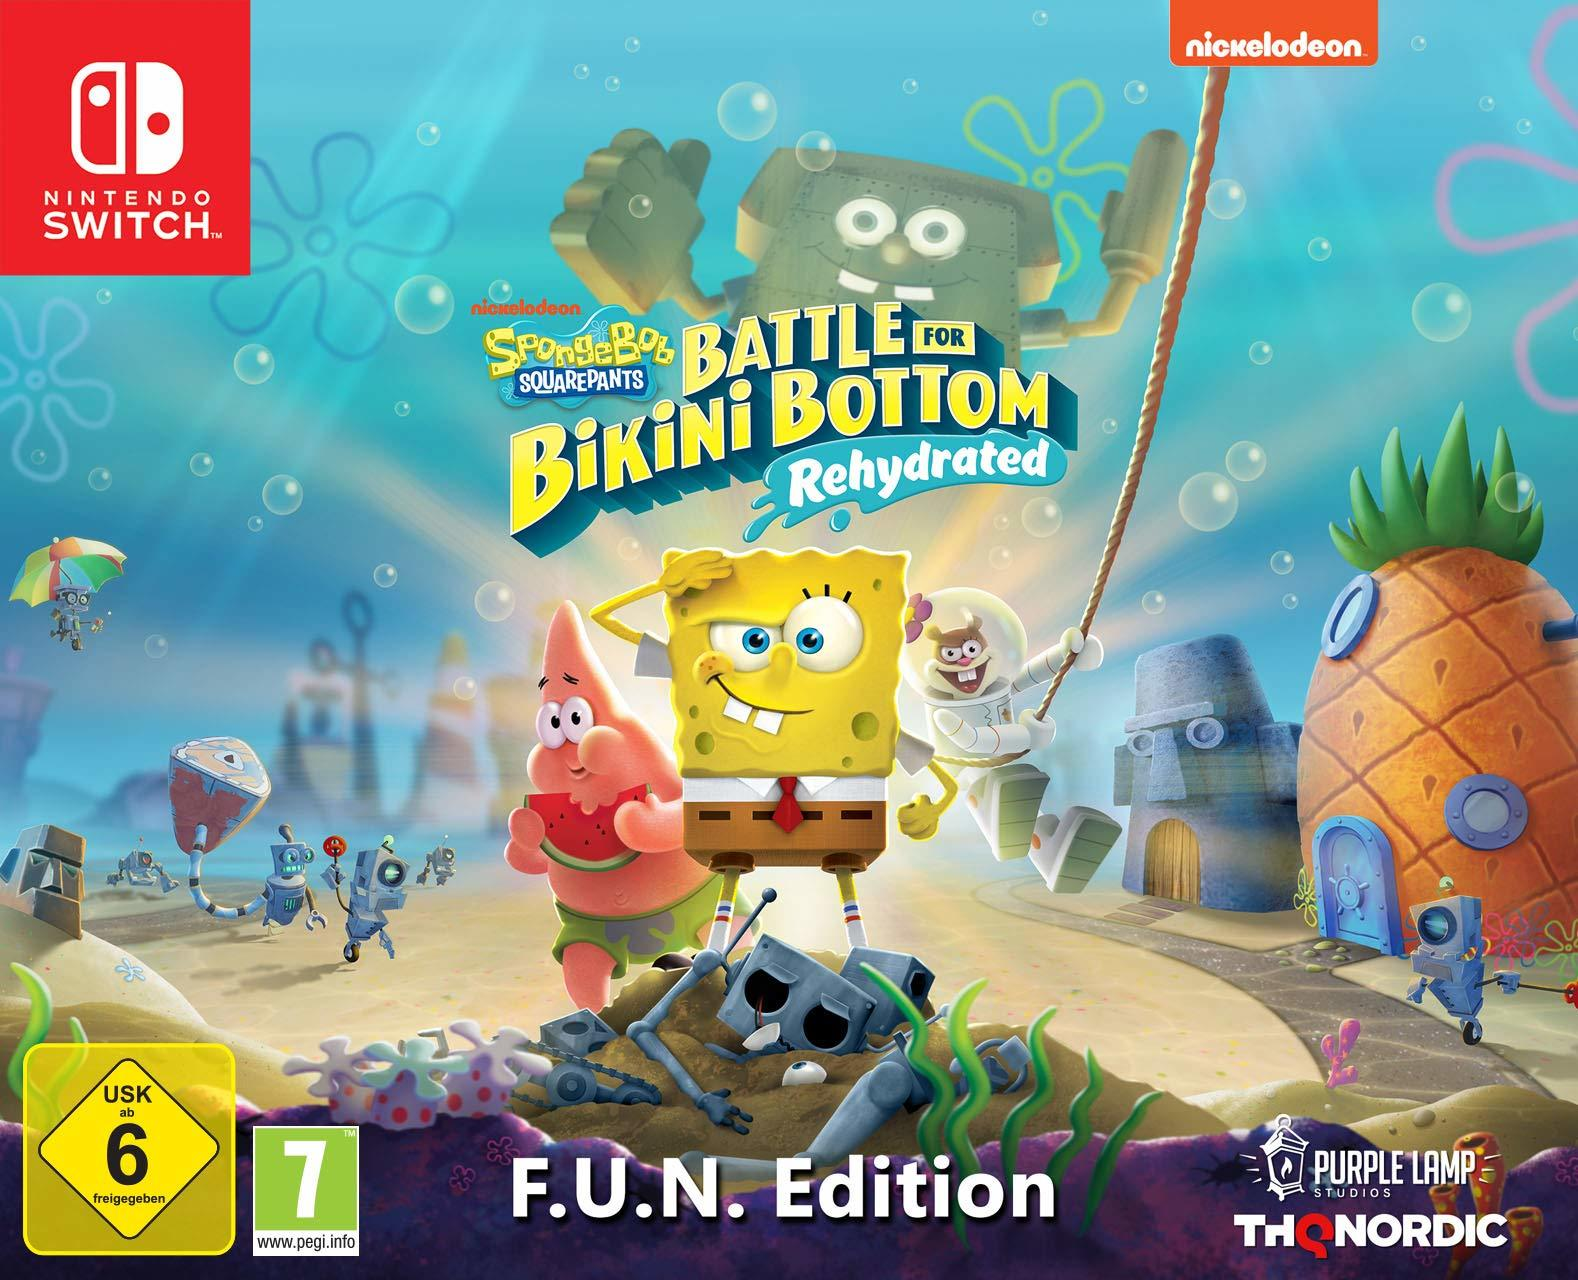 Spongebob SquarePants: - Switch] [Nintendo Bikini Battle - Rehydrated for Edition F.U.N. Bottom